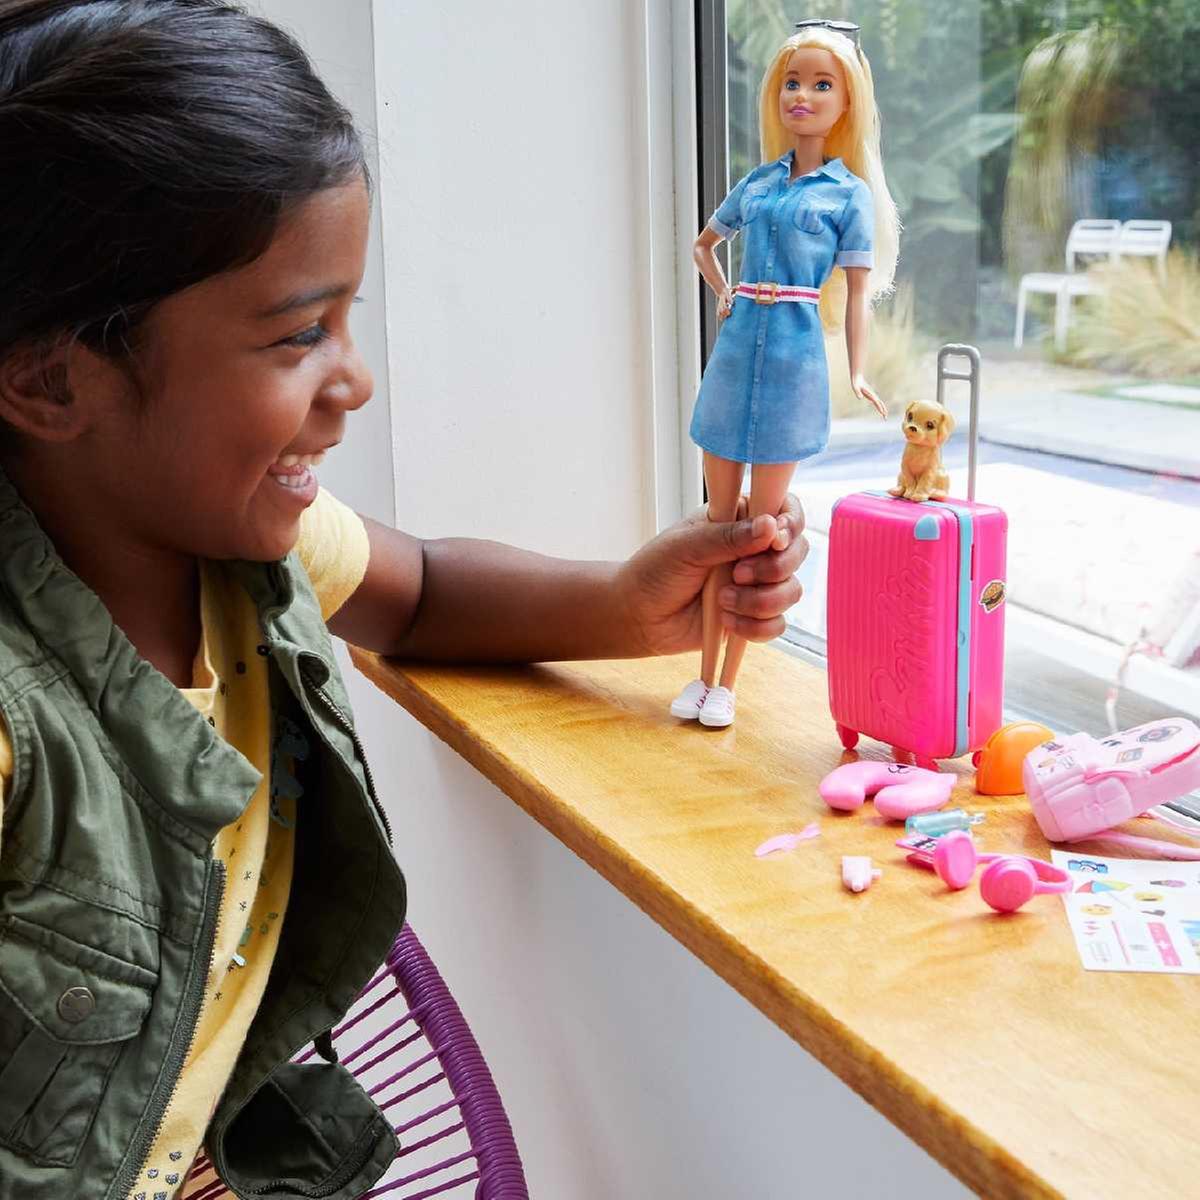 Barbie - Vamos de Viaje | Toys R' Us | Toys"R"Us España